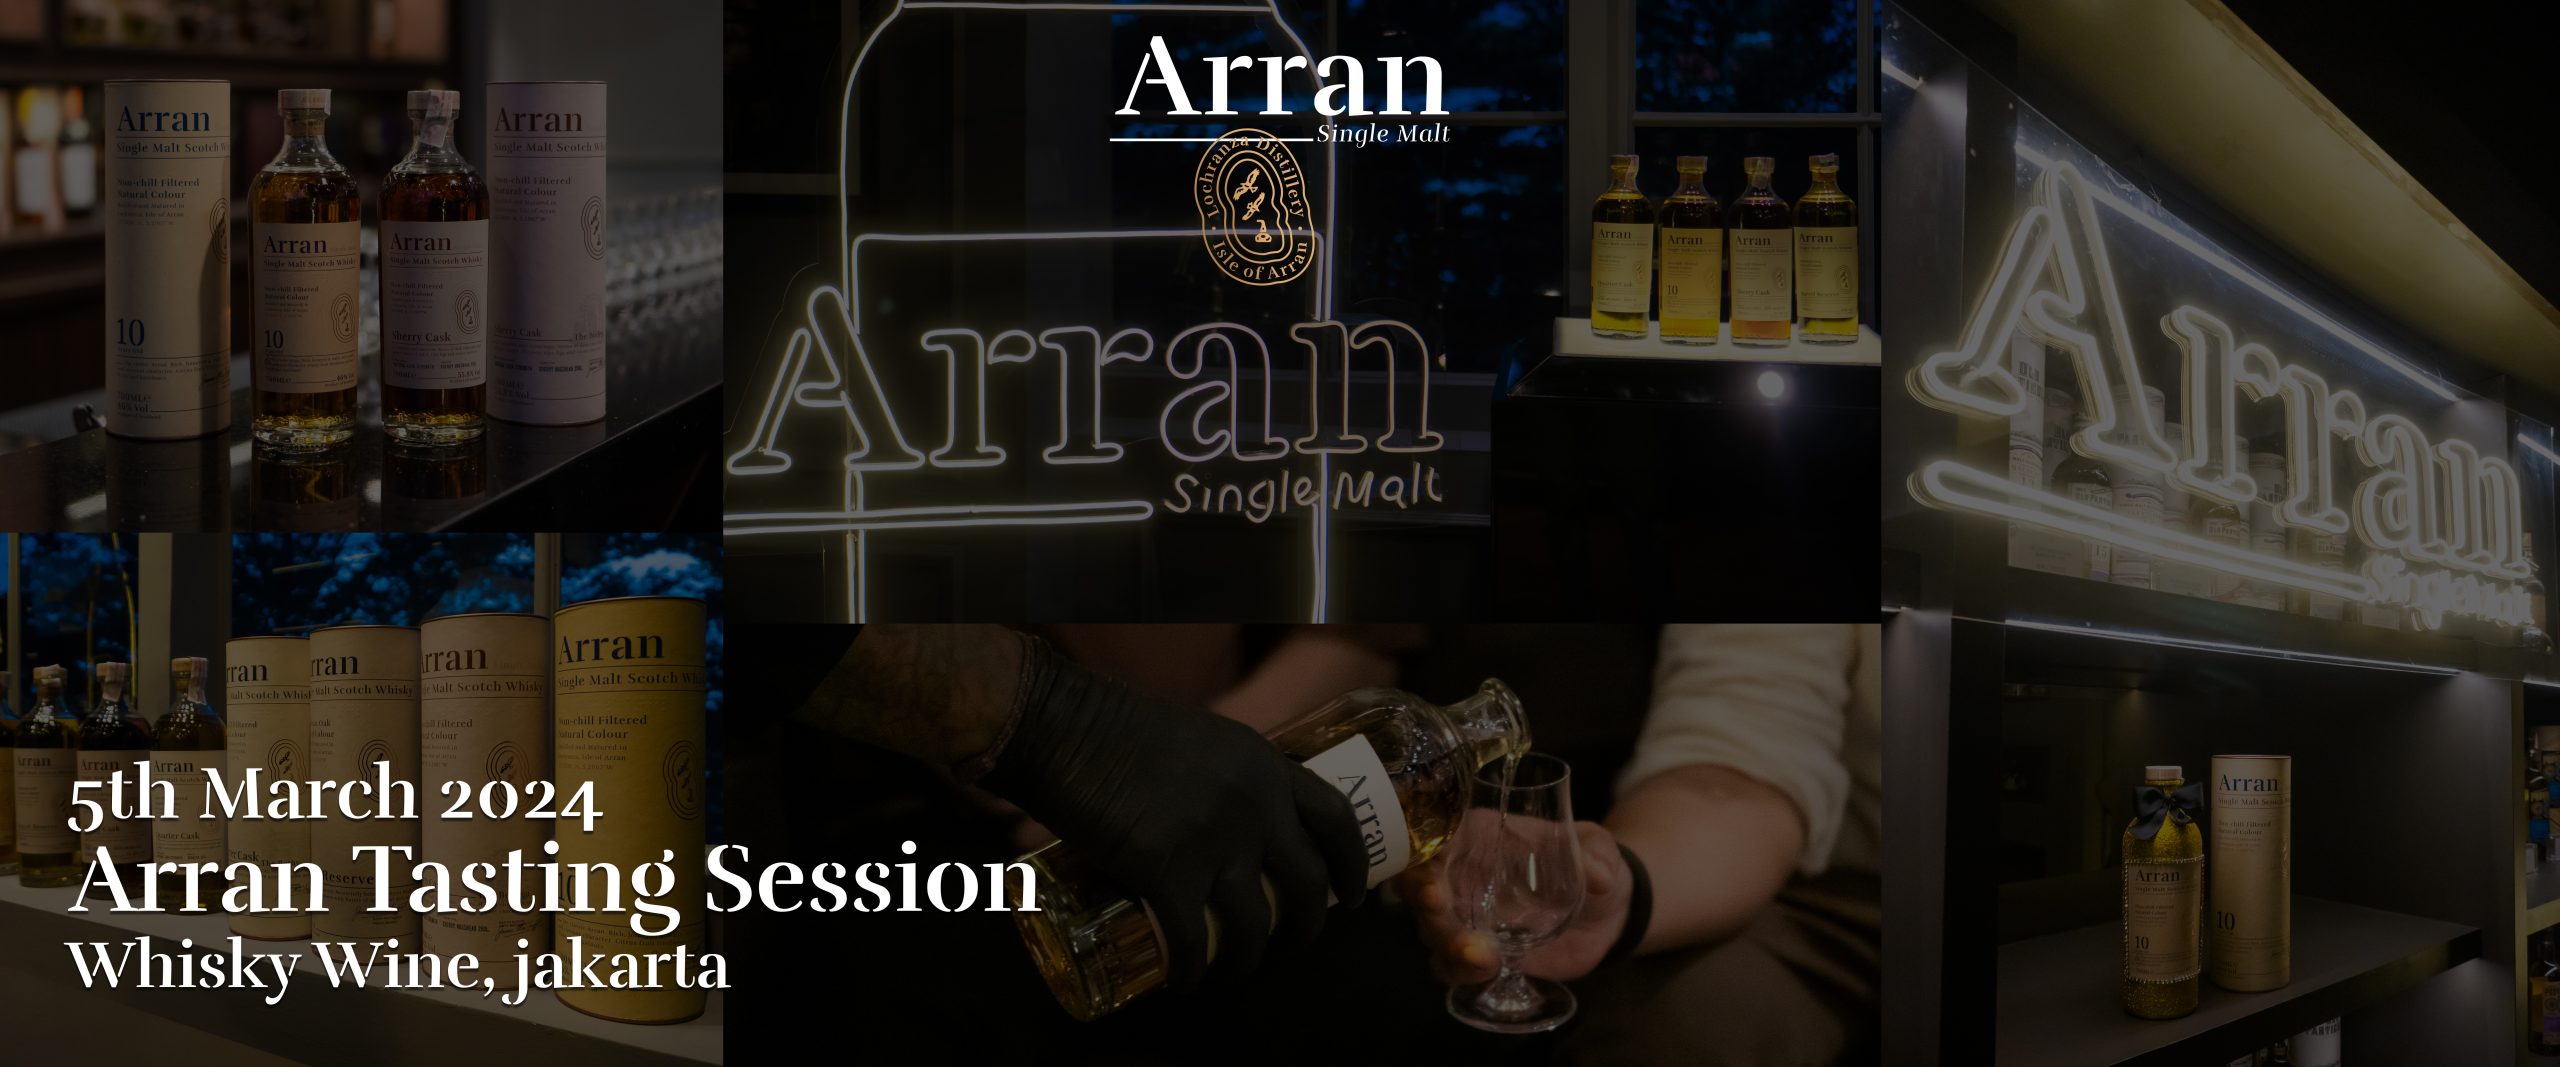 Arran event whisky wine